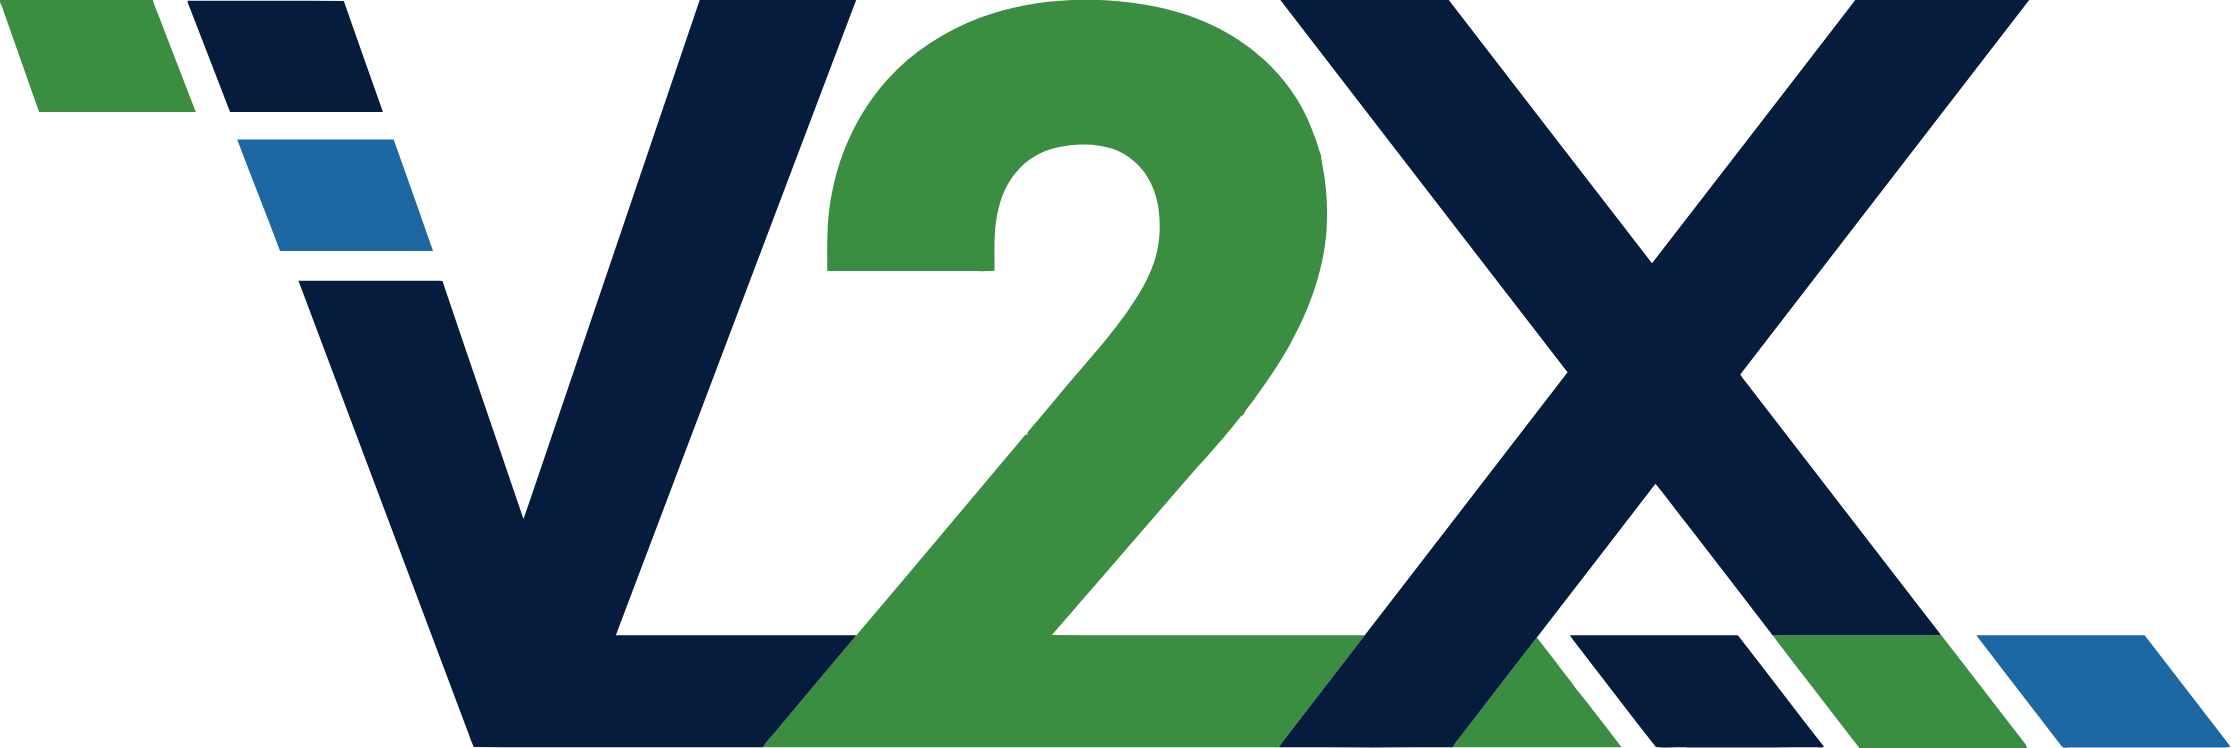 V2X logo (transparent PNG)